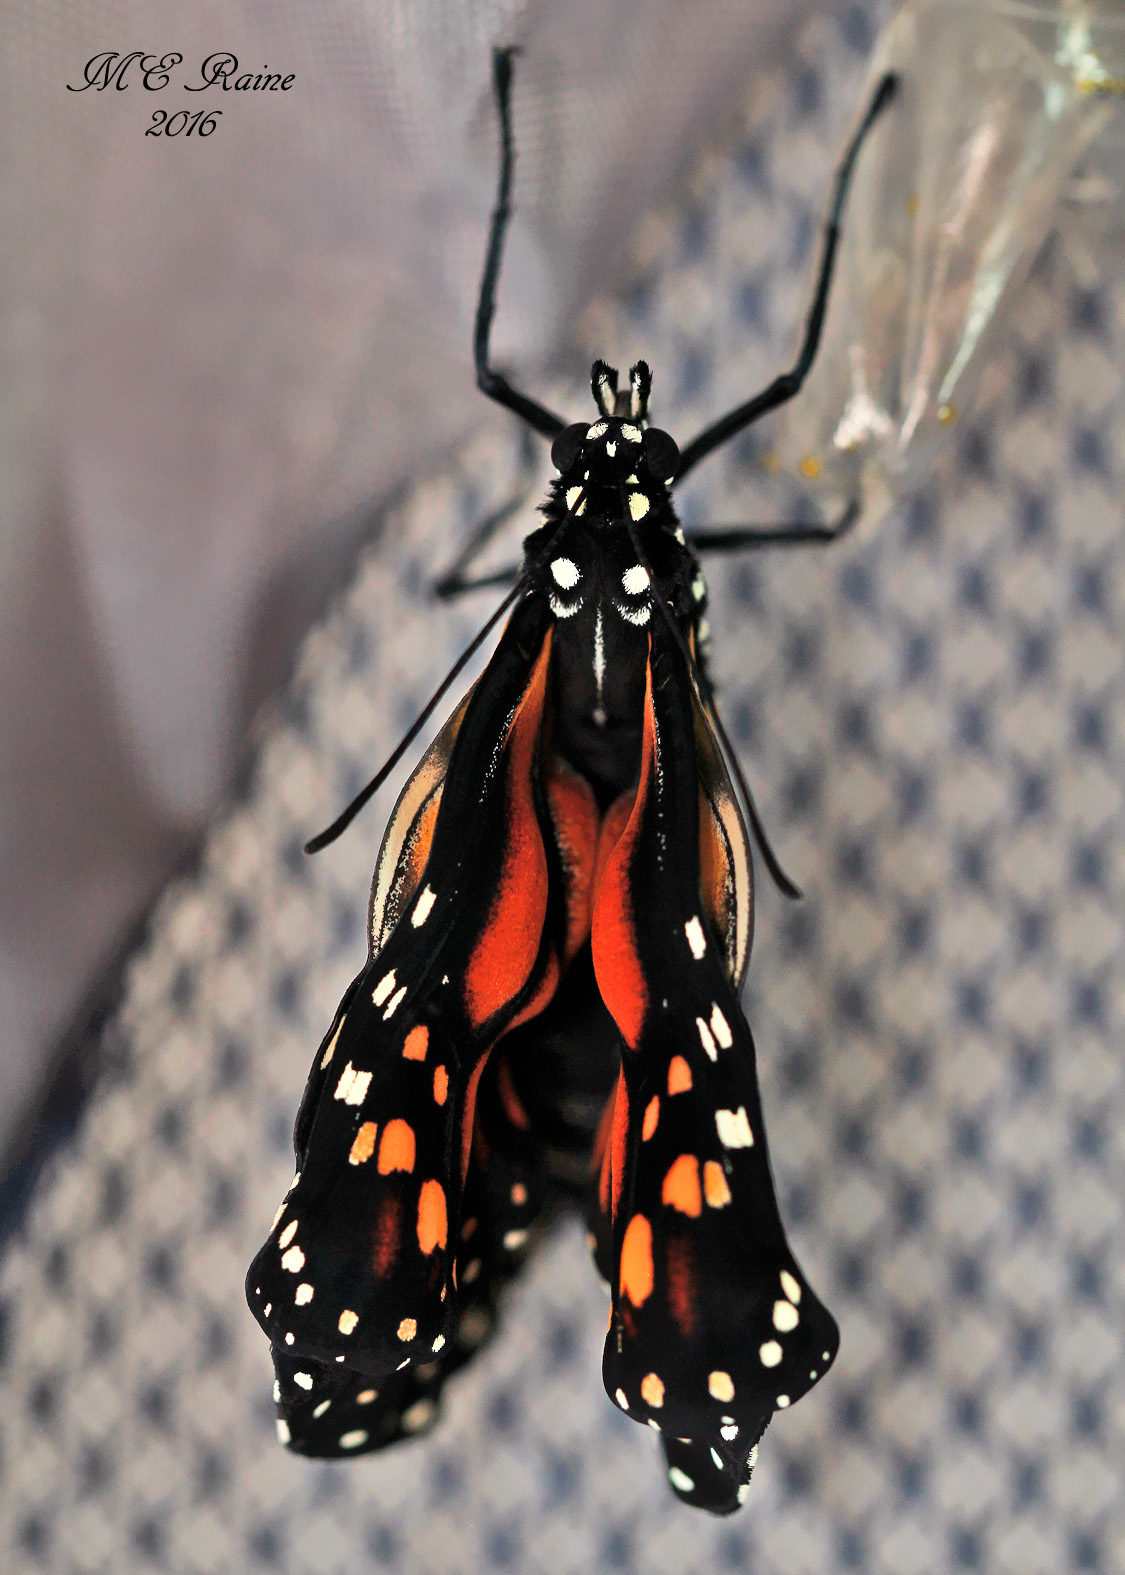 final-post-monarch-butterfly-emergence-of-no-6-w-fluids-pumping-into-wings-091816-7am-ok-wm